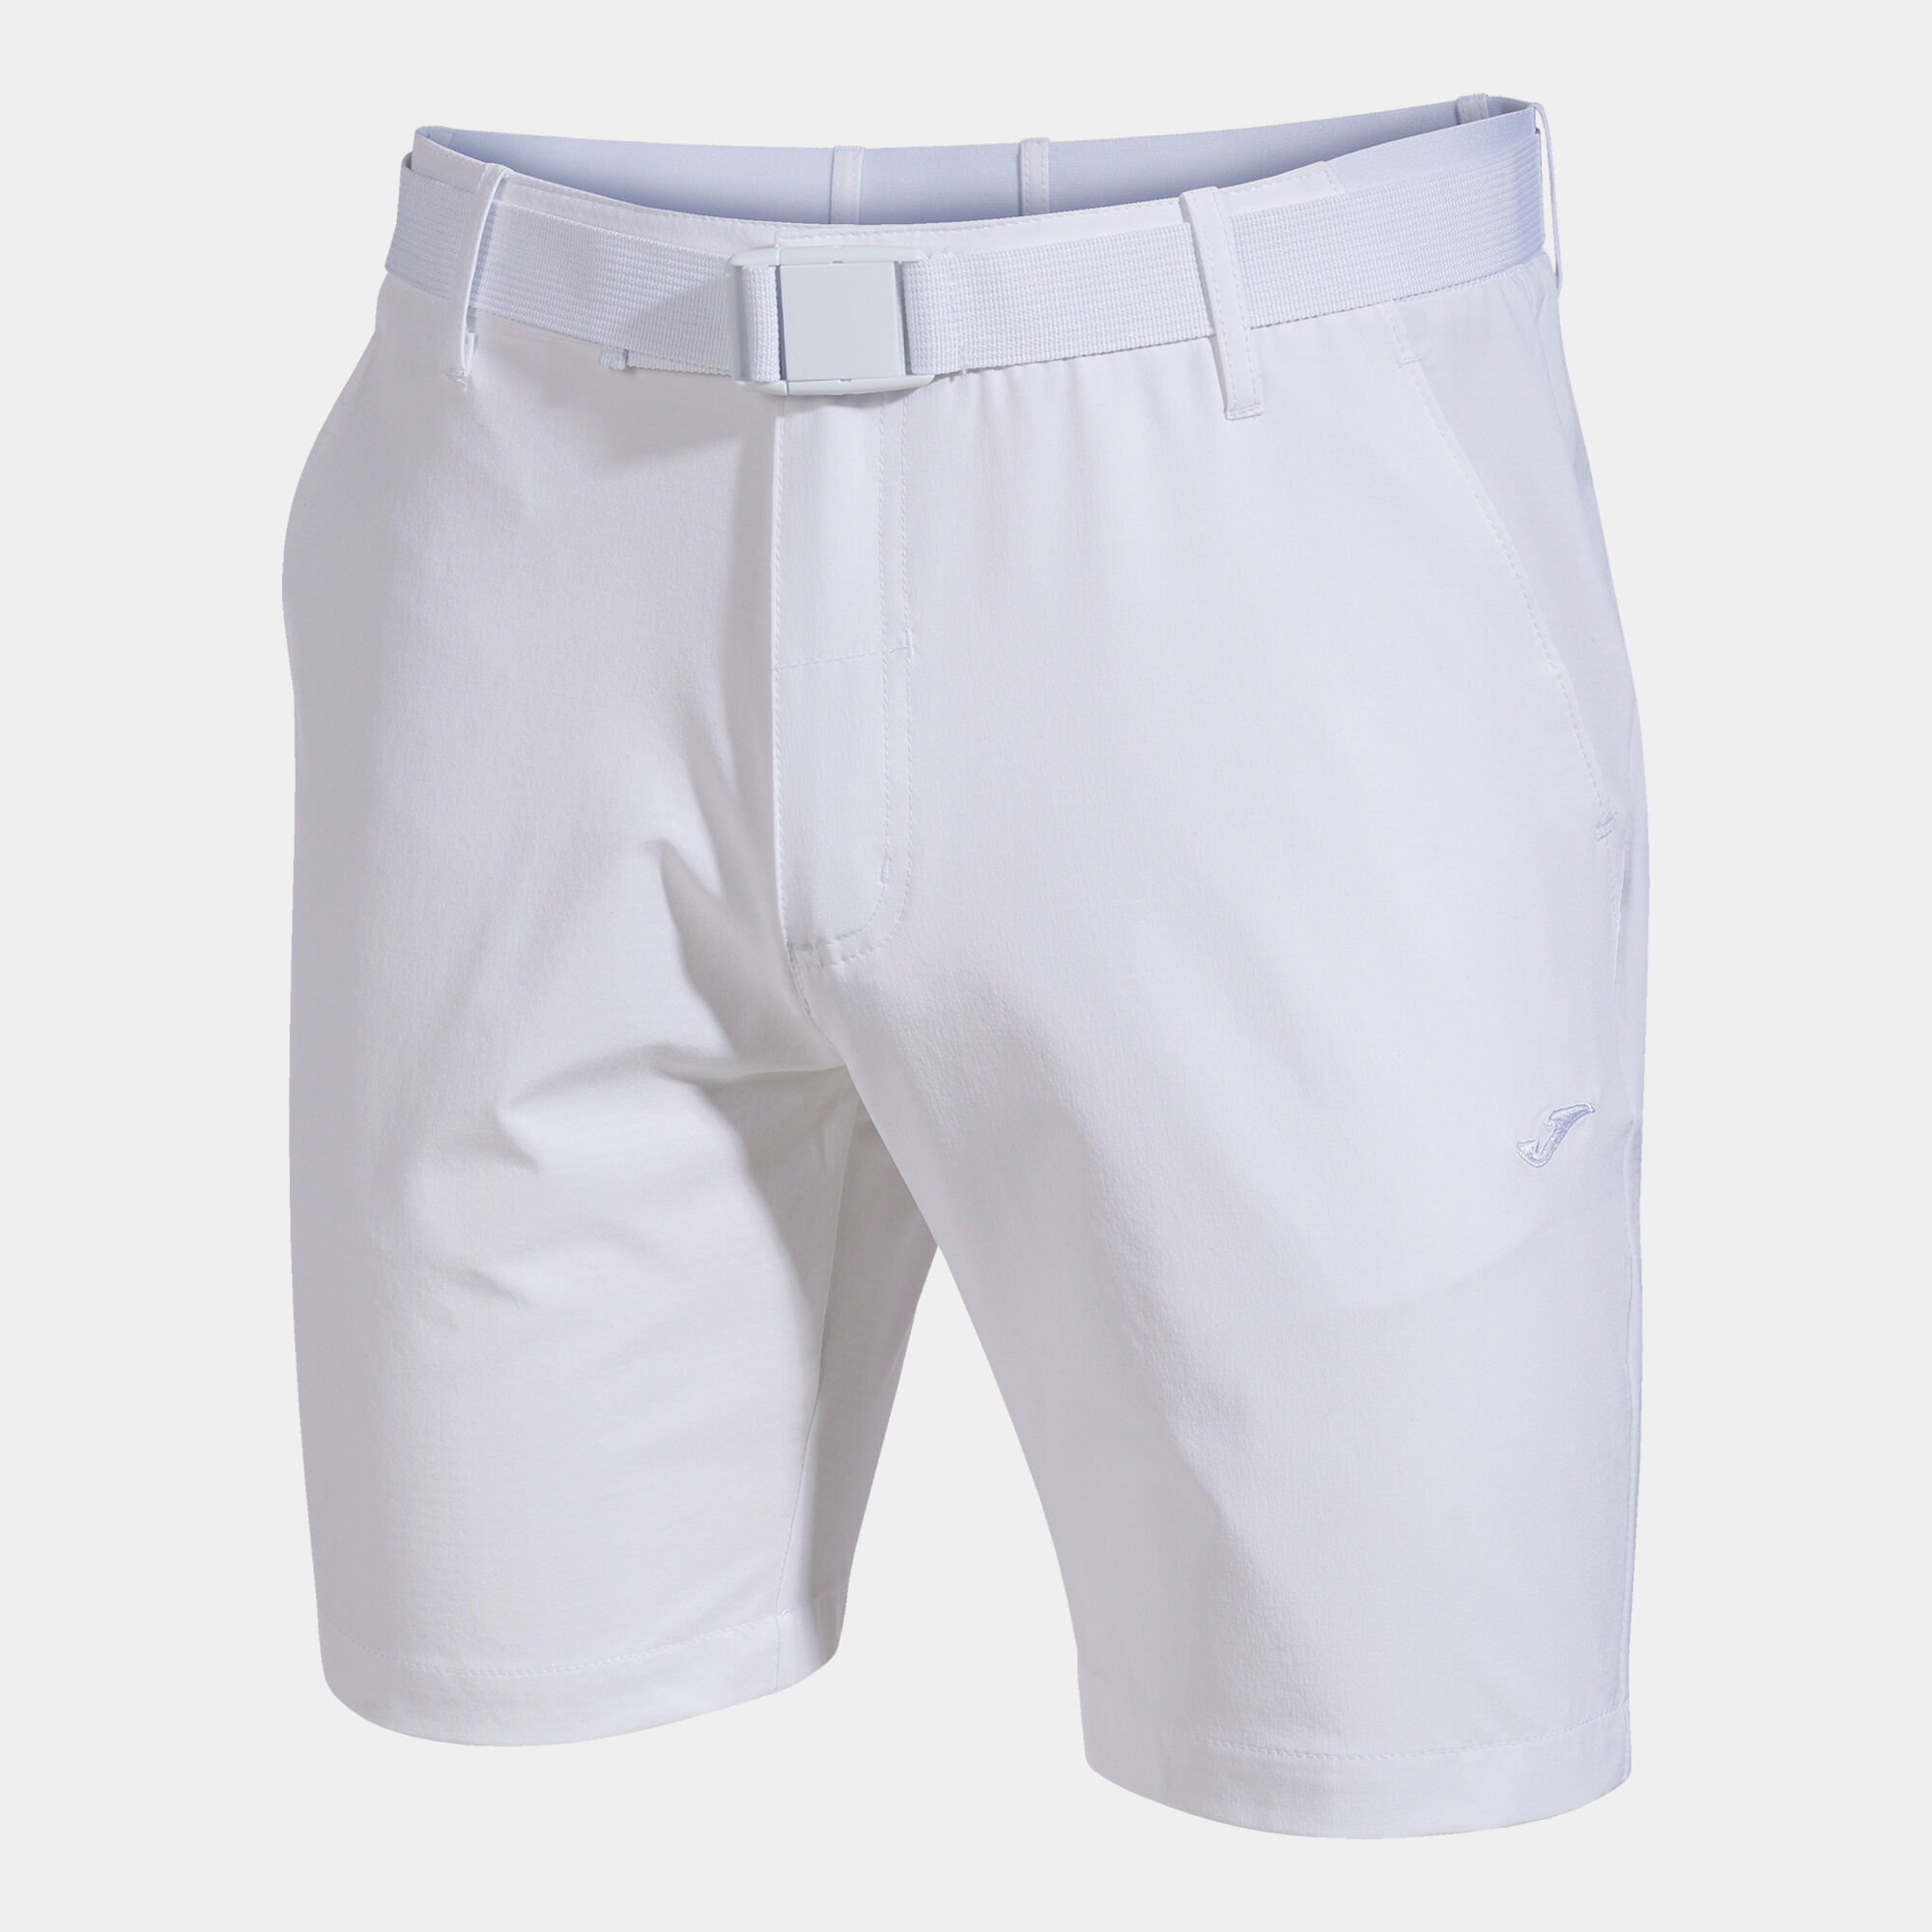 Bermuda shorts man Pasarela III white